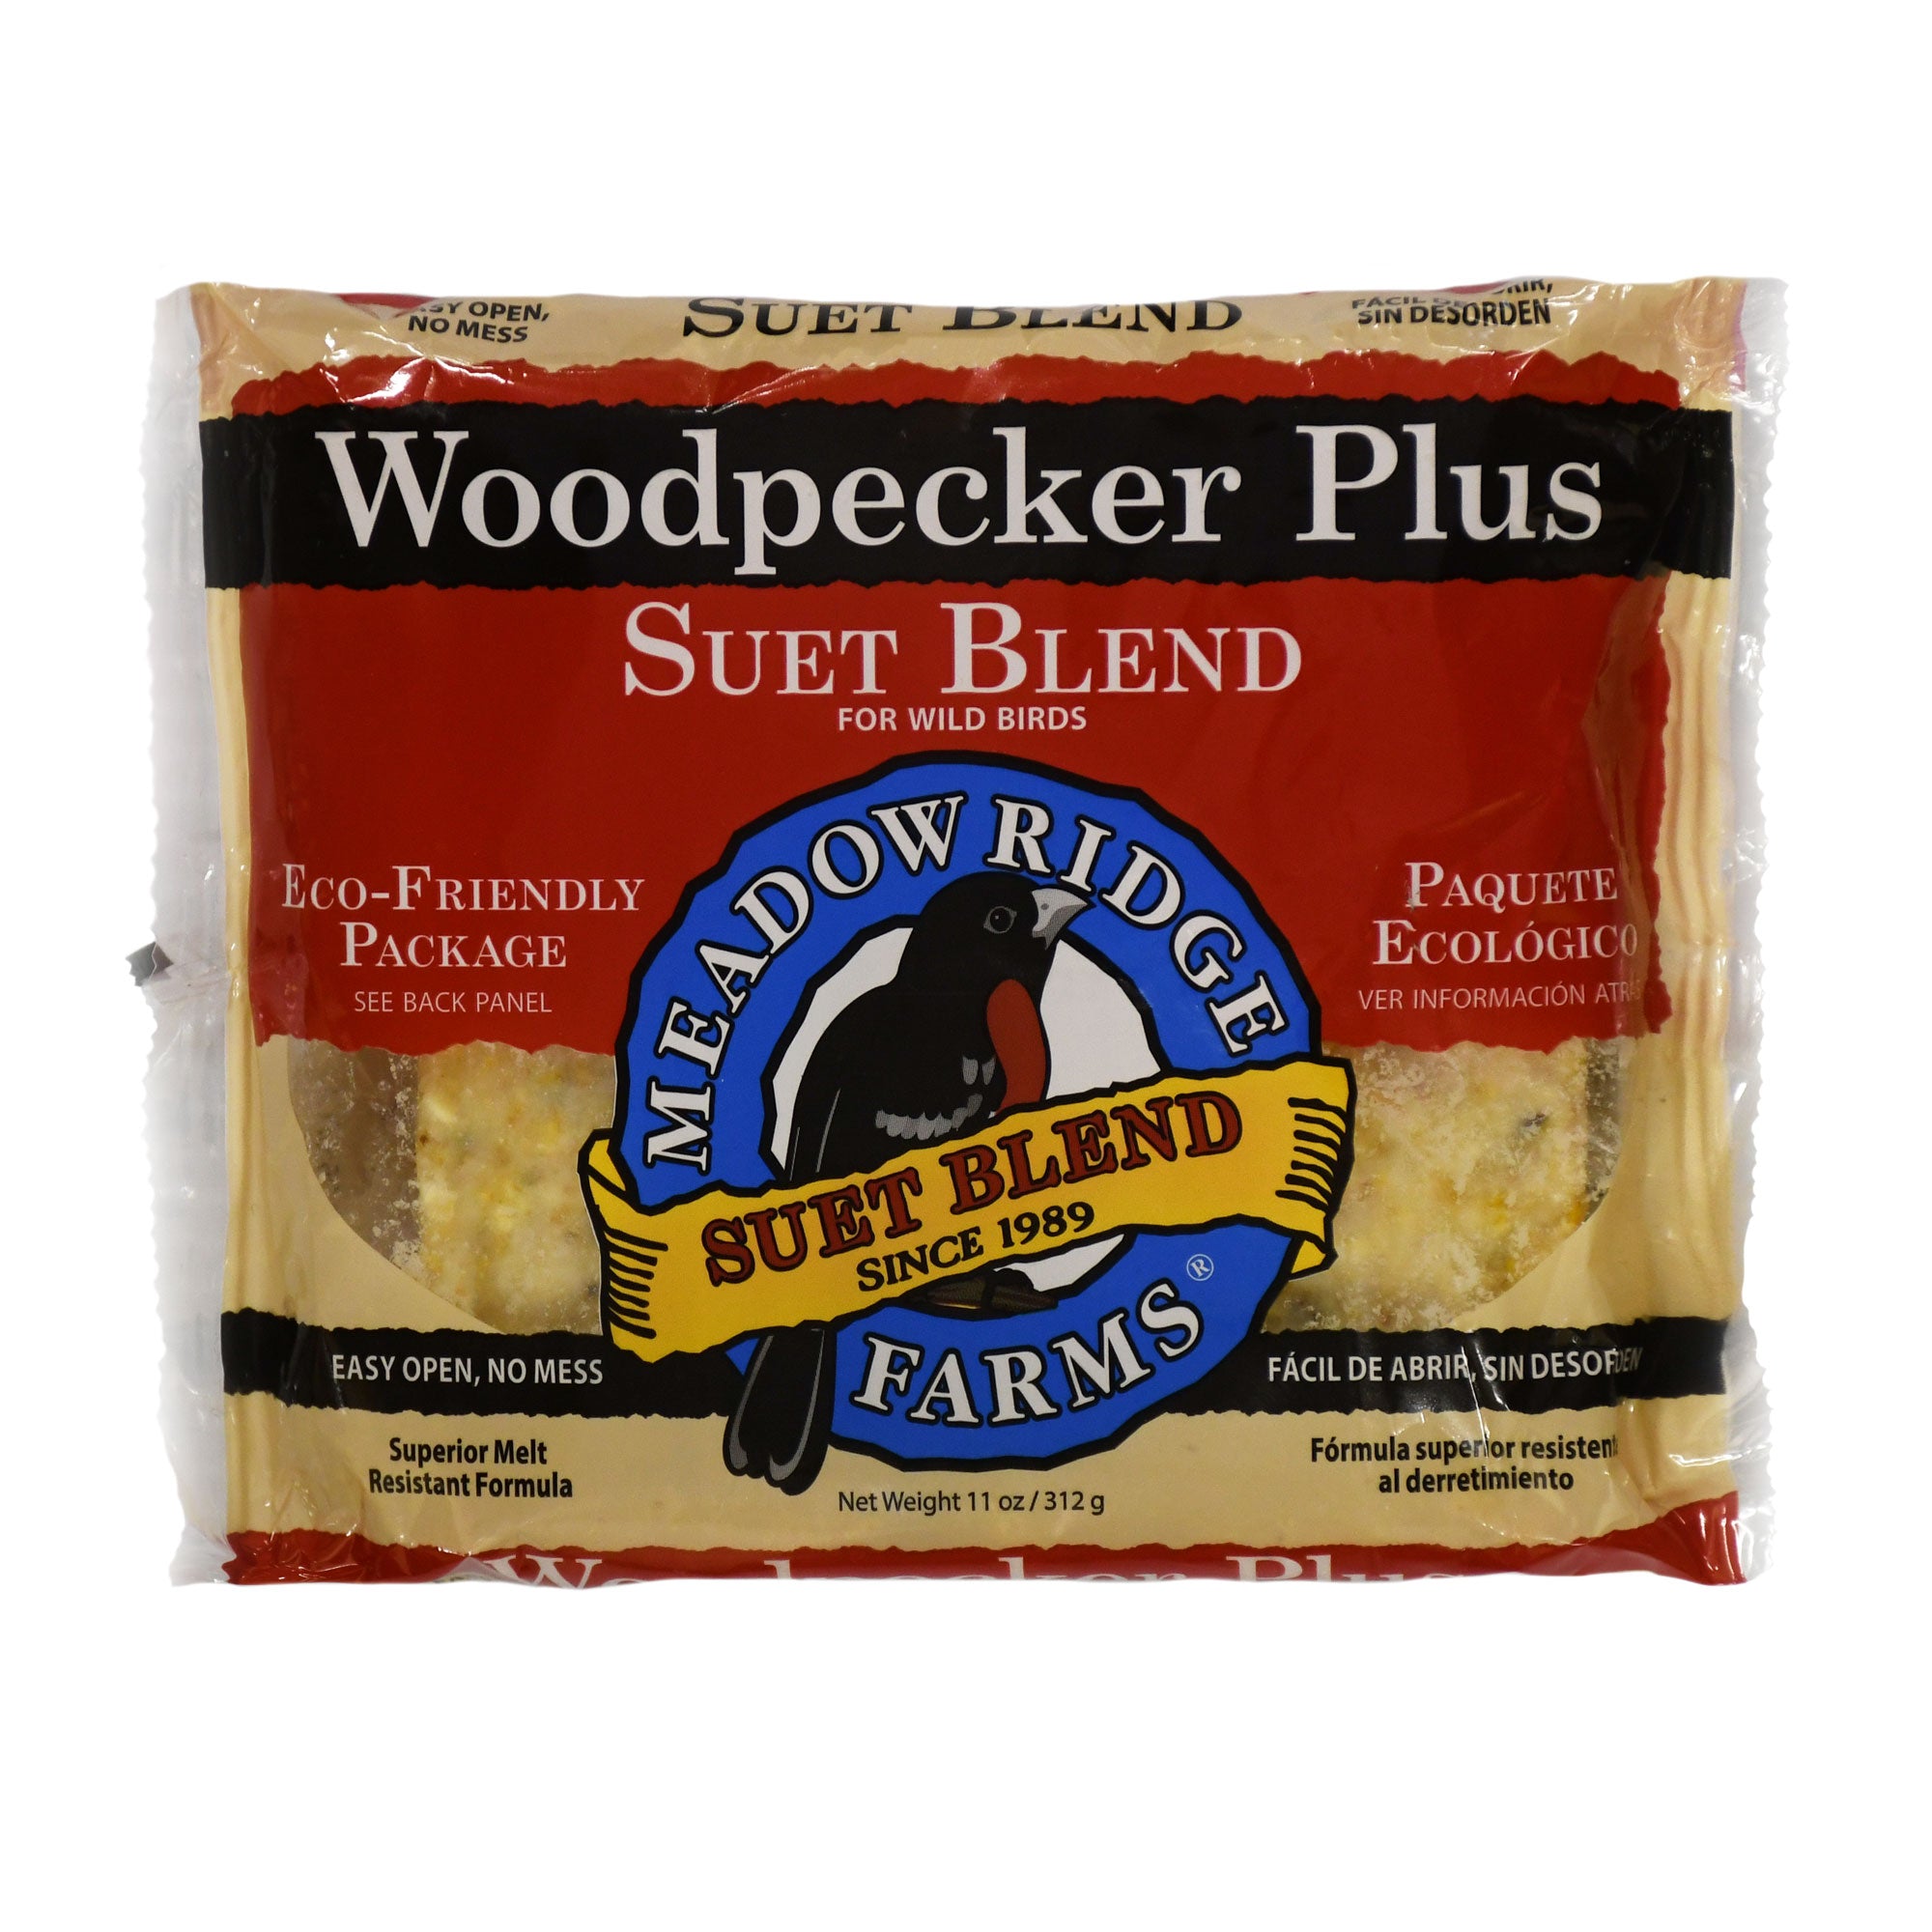 Woodpecker Plus - Suet Cake